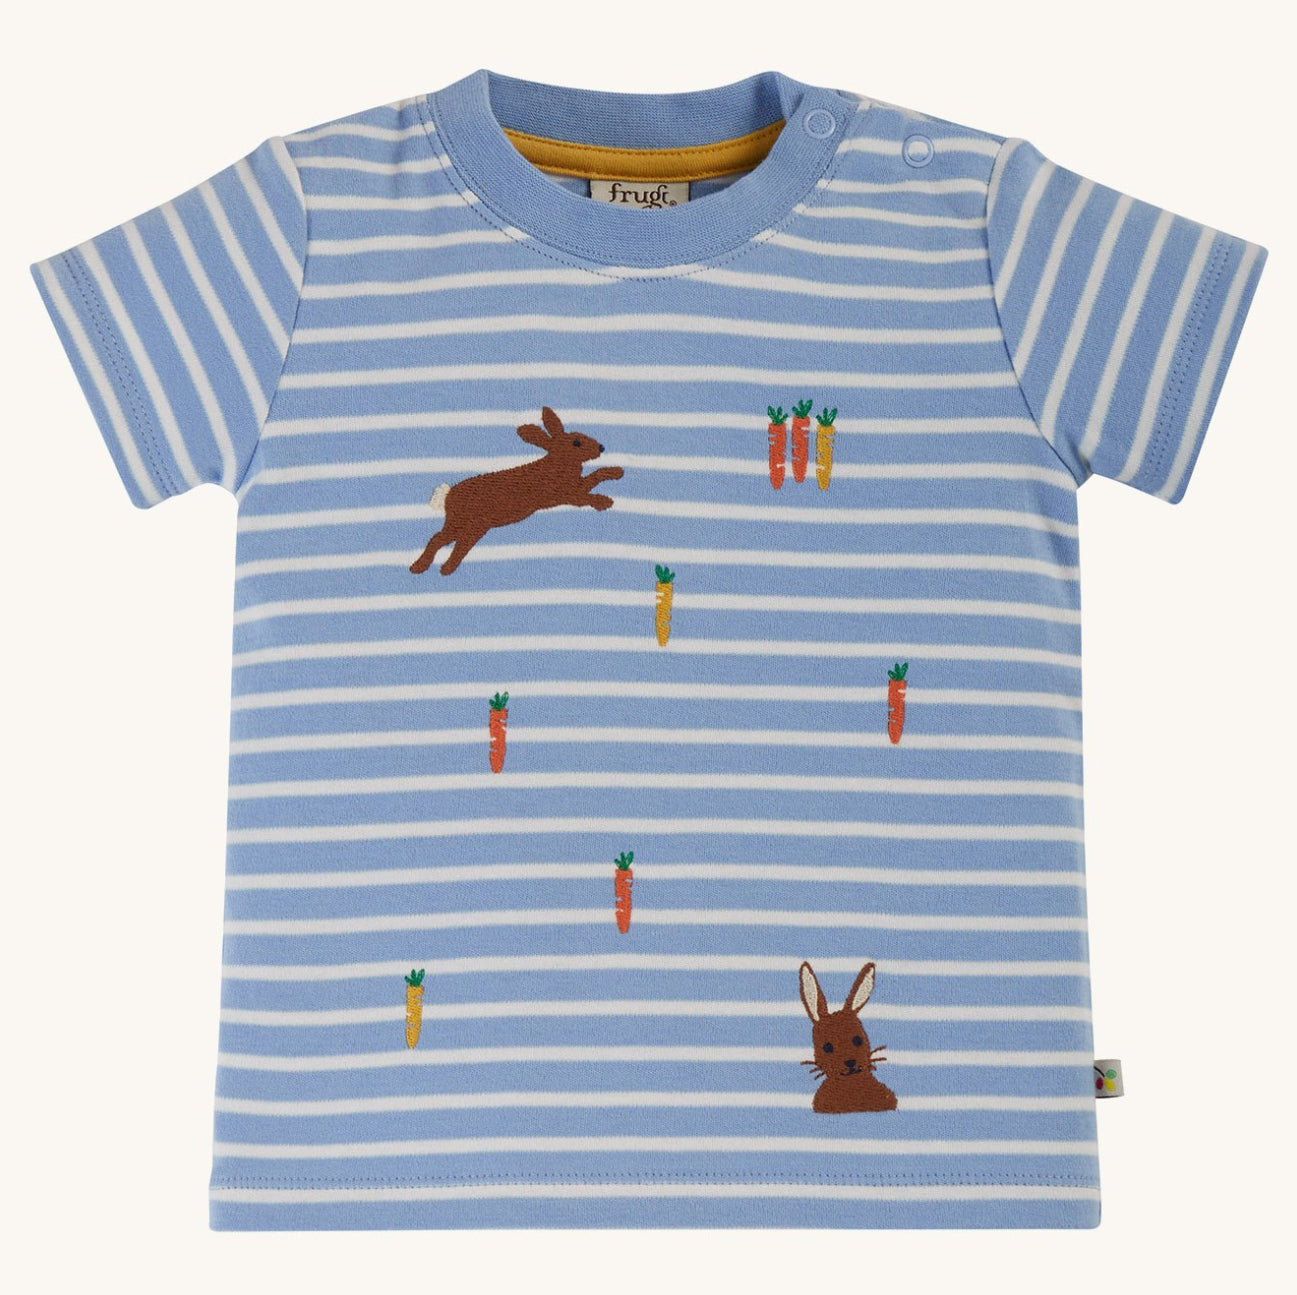 SALE Frugi Ennis Rabbit Embroidery T-Shirt SALE